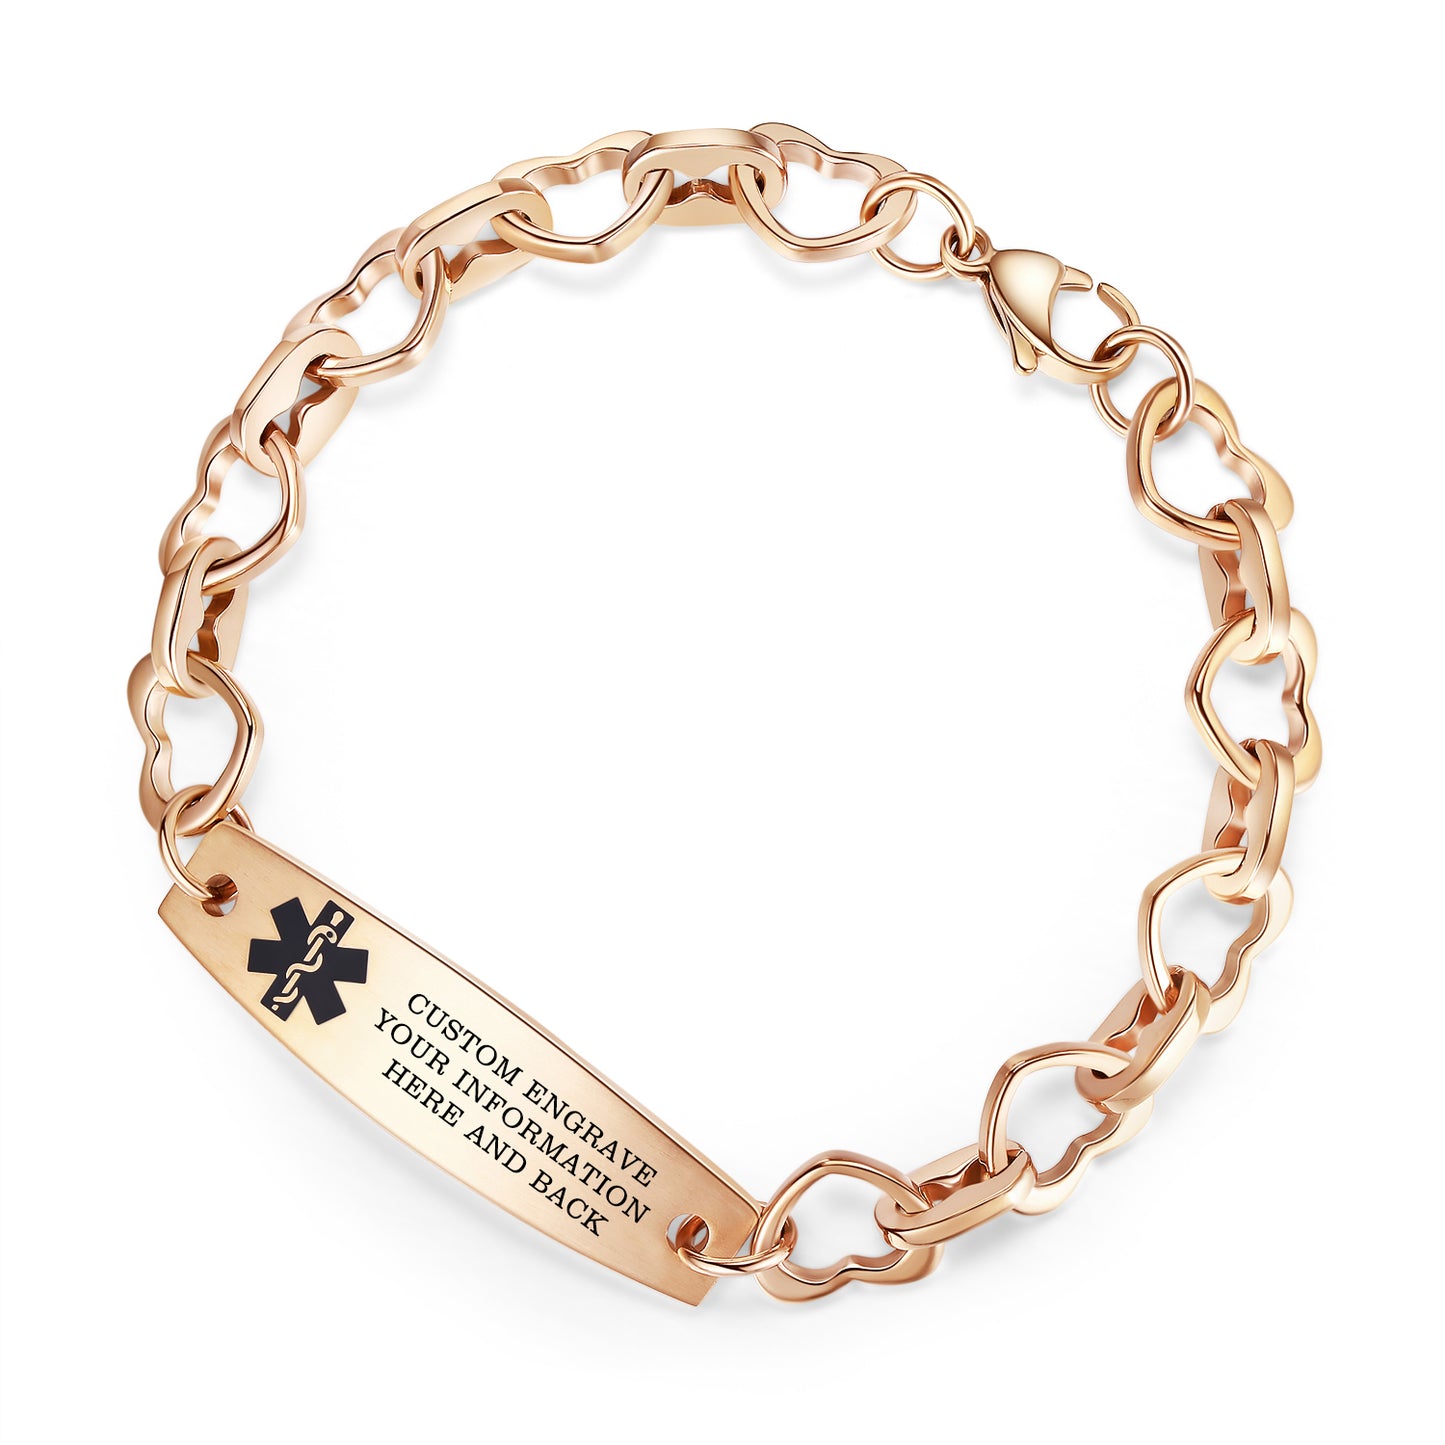 Heart Medical Alert Bracelets for Women Stainless Steel Heart Link Medical bracelets with Free custom engraving